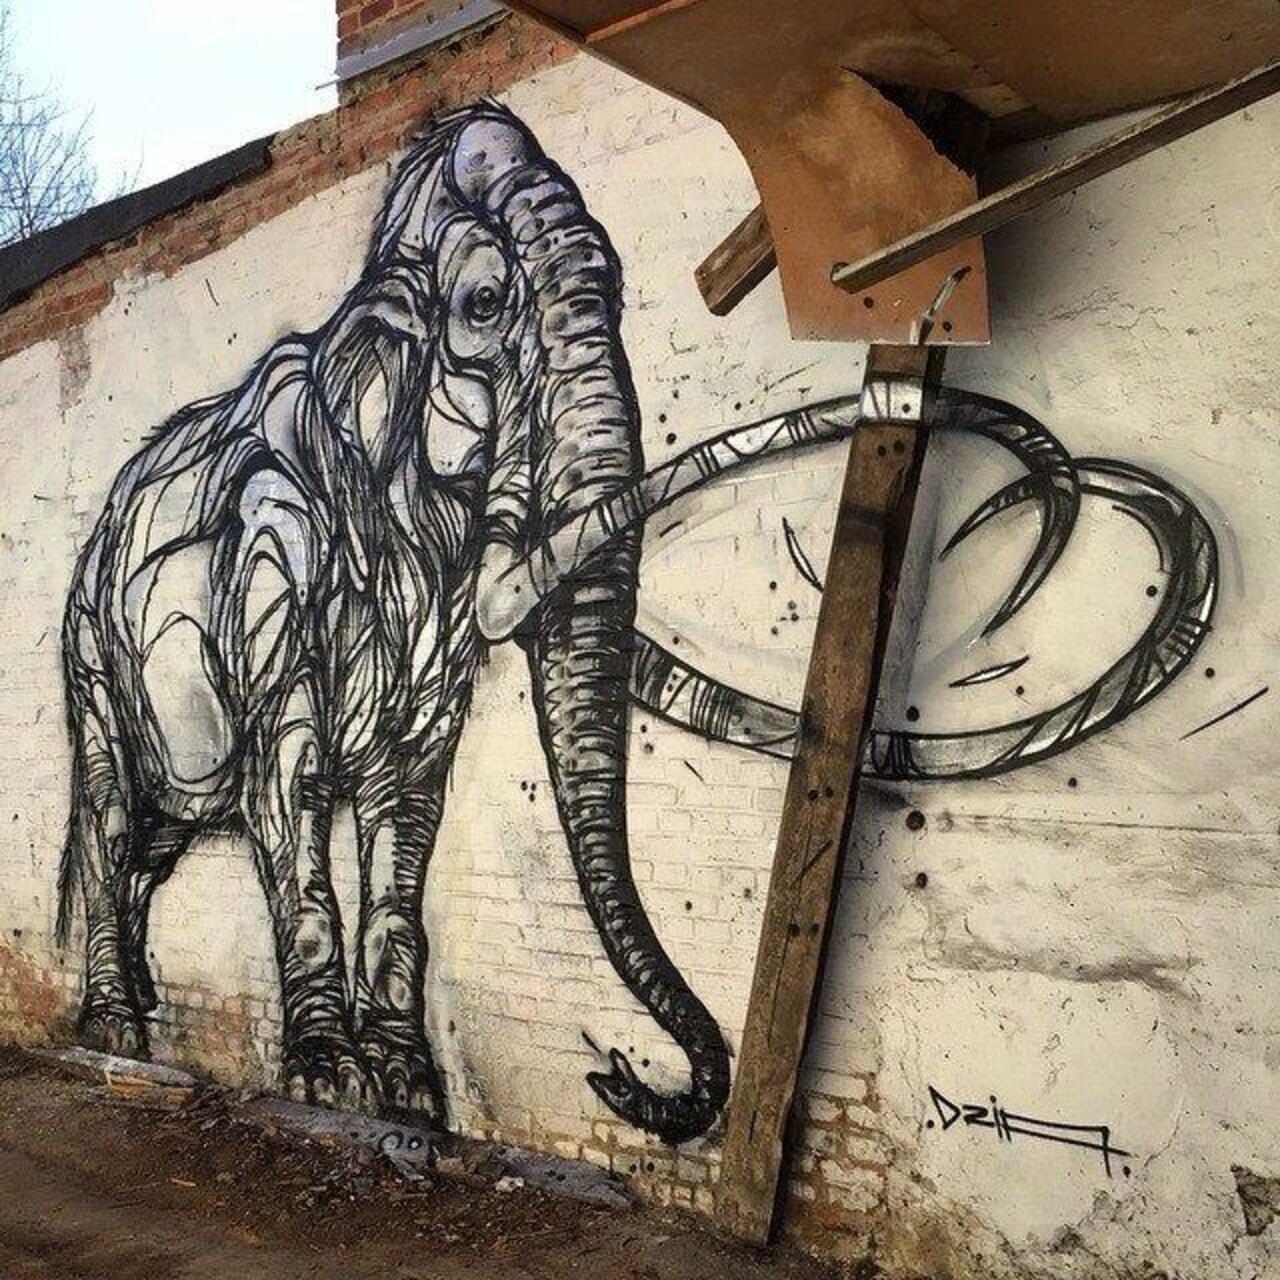 “@GoogleStreetArt: Mammoth. New nature in Street Art wall by DZIA 

#art #graffiti #mural #streetart http://t.co/8ktIhwJhlg”